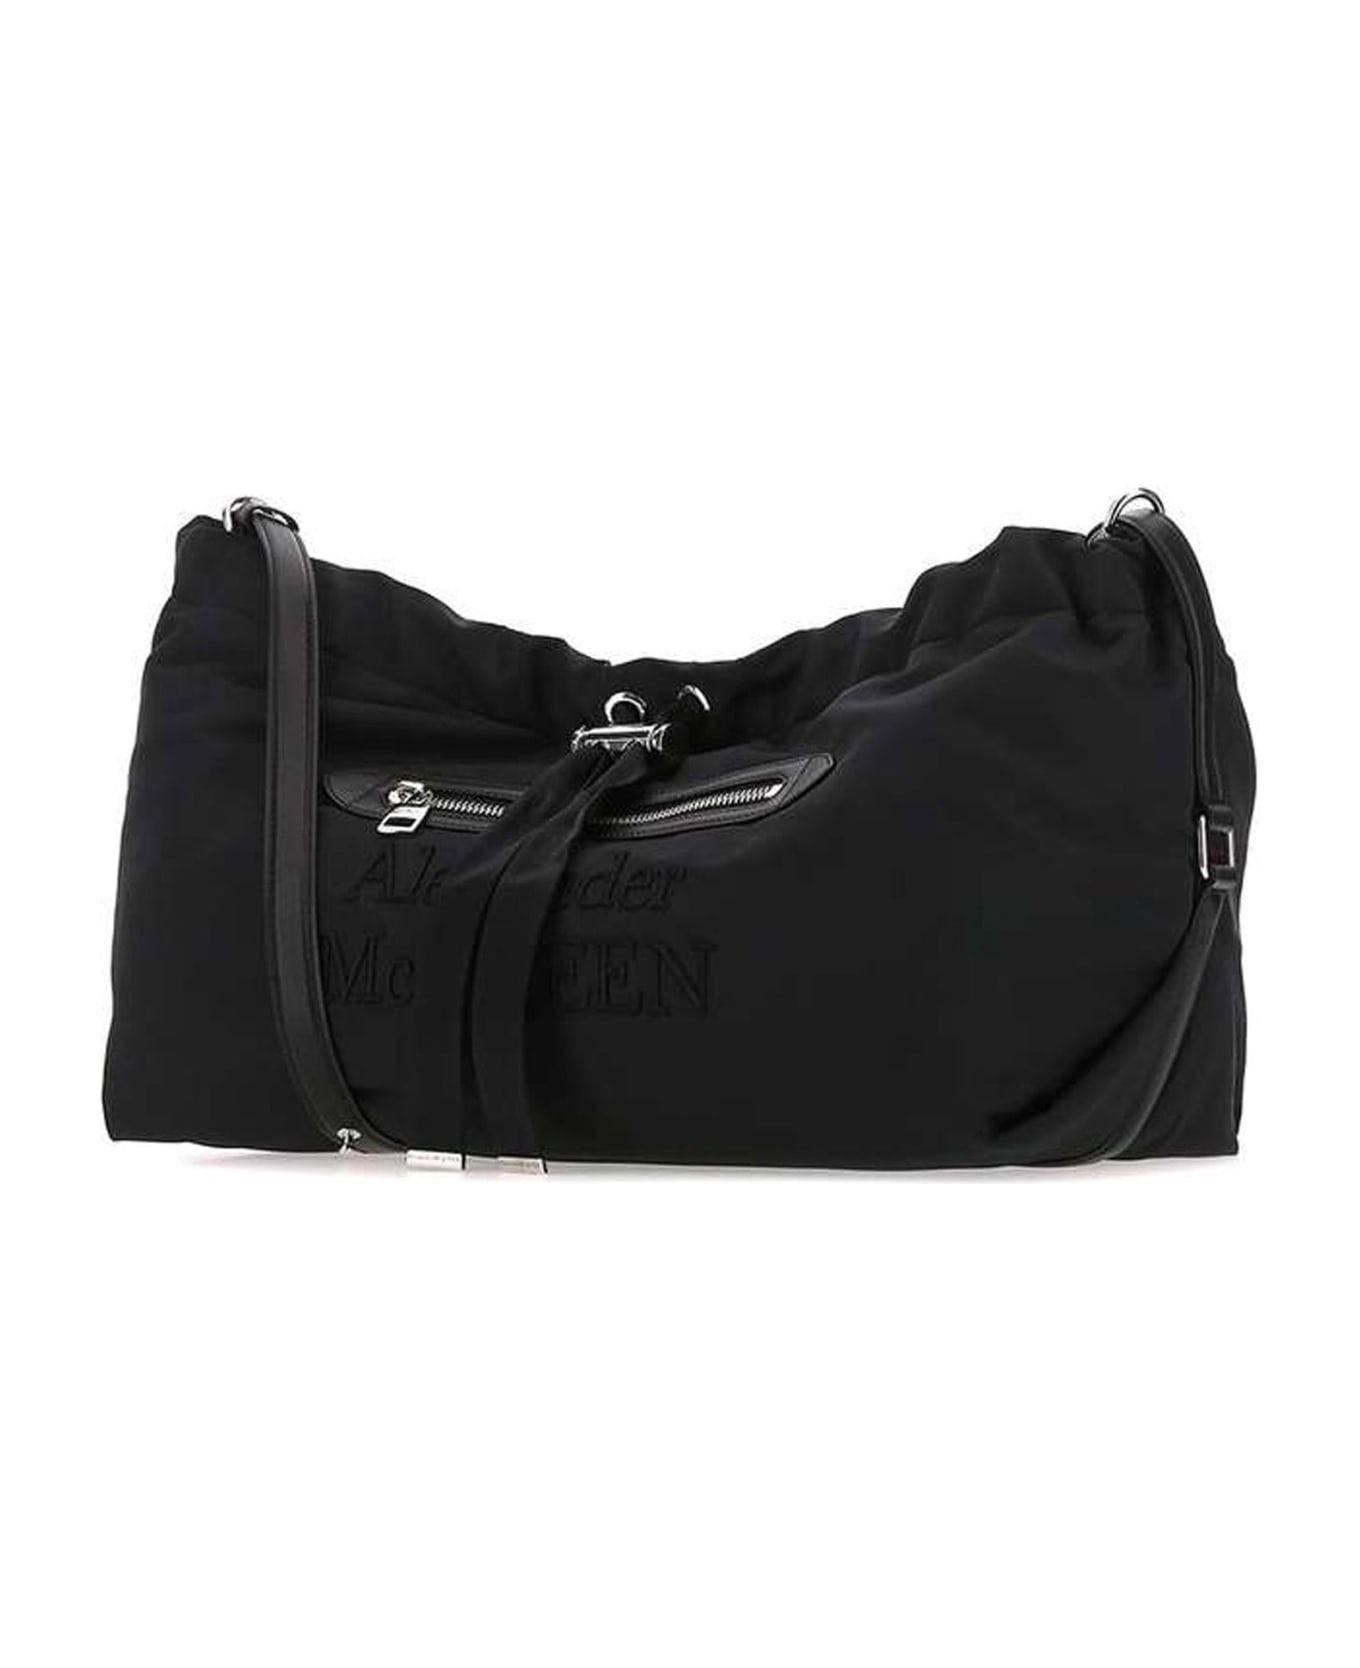 Alexander McQueen Bundle Shoulder Bag - Black